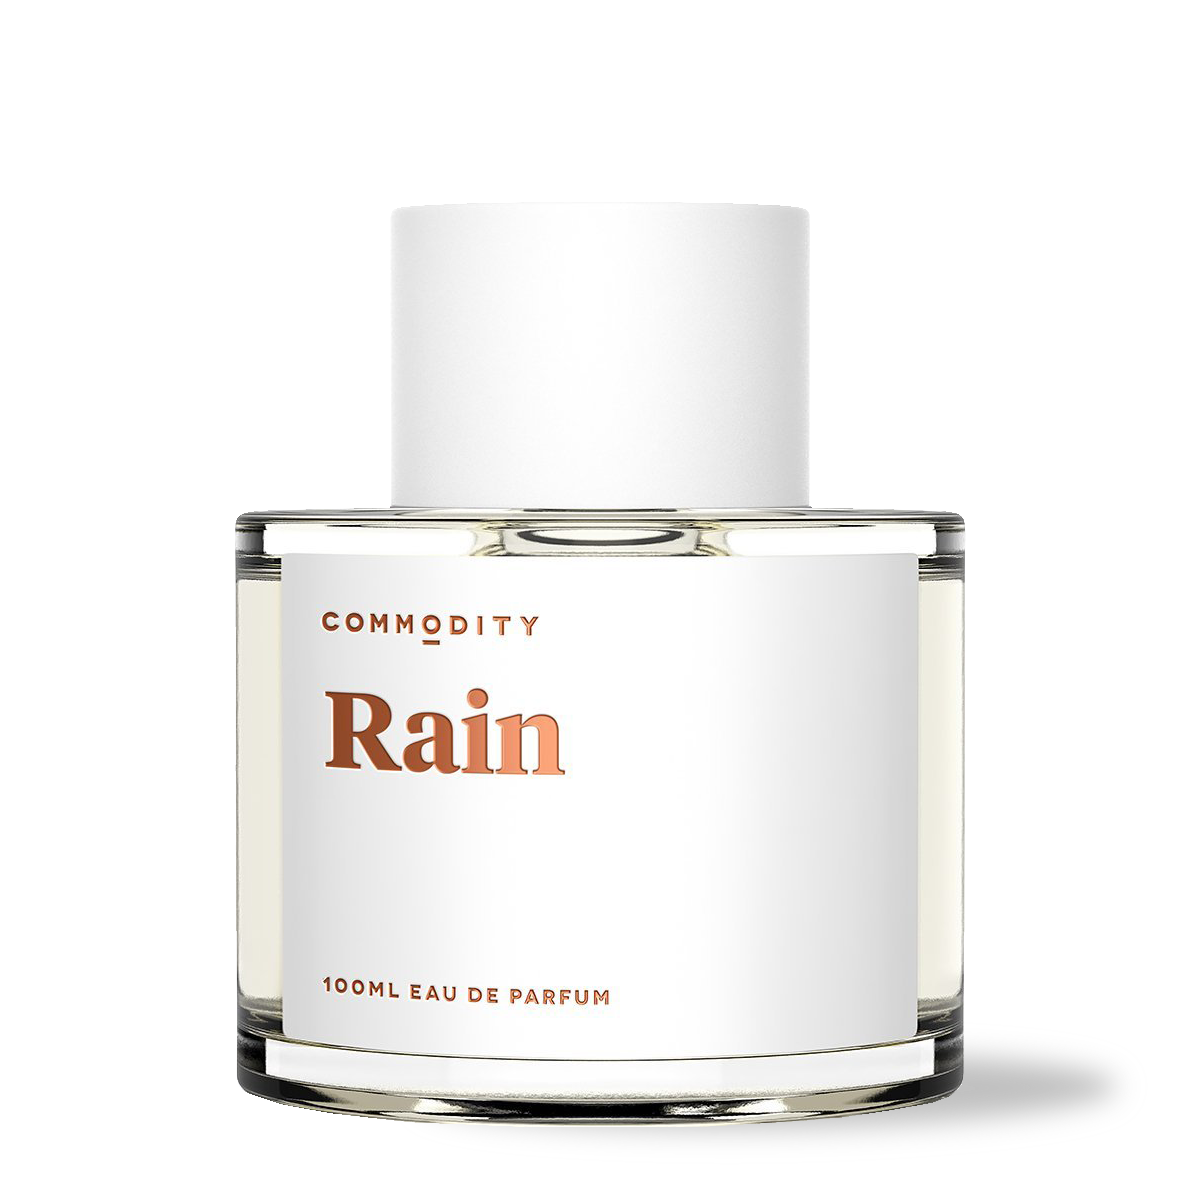 Rain – CommodityUS